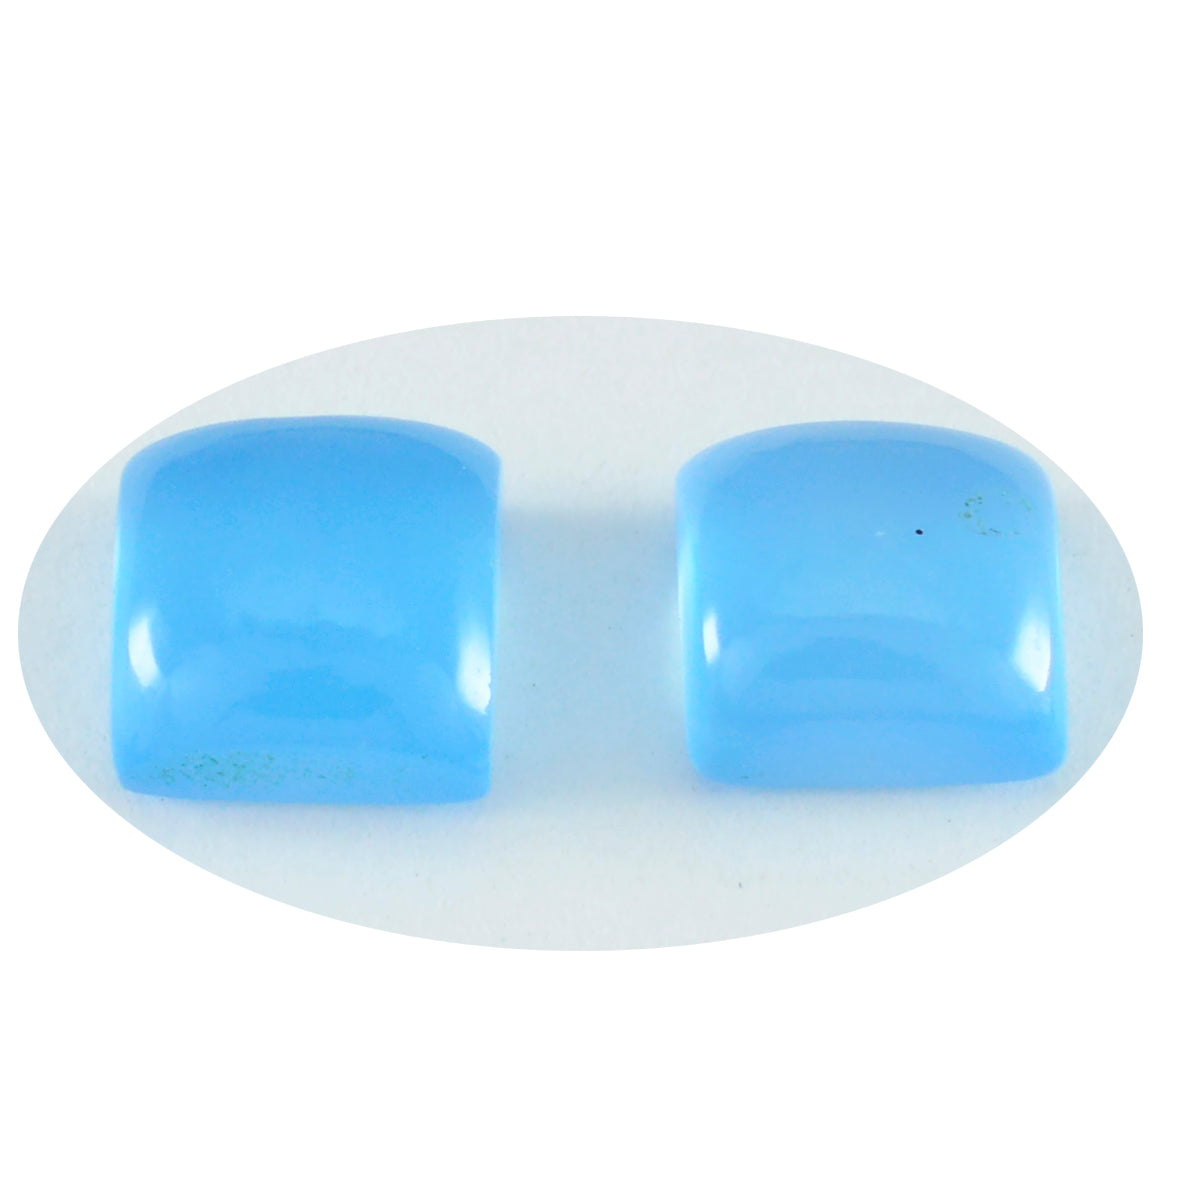 riyogems 1st blå kalcedon cabochon 10x10 mm fyrkantig form härlig kvalitet lös pärla